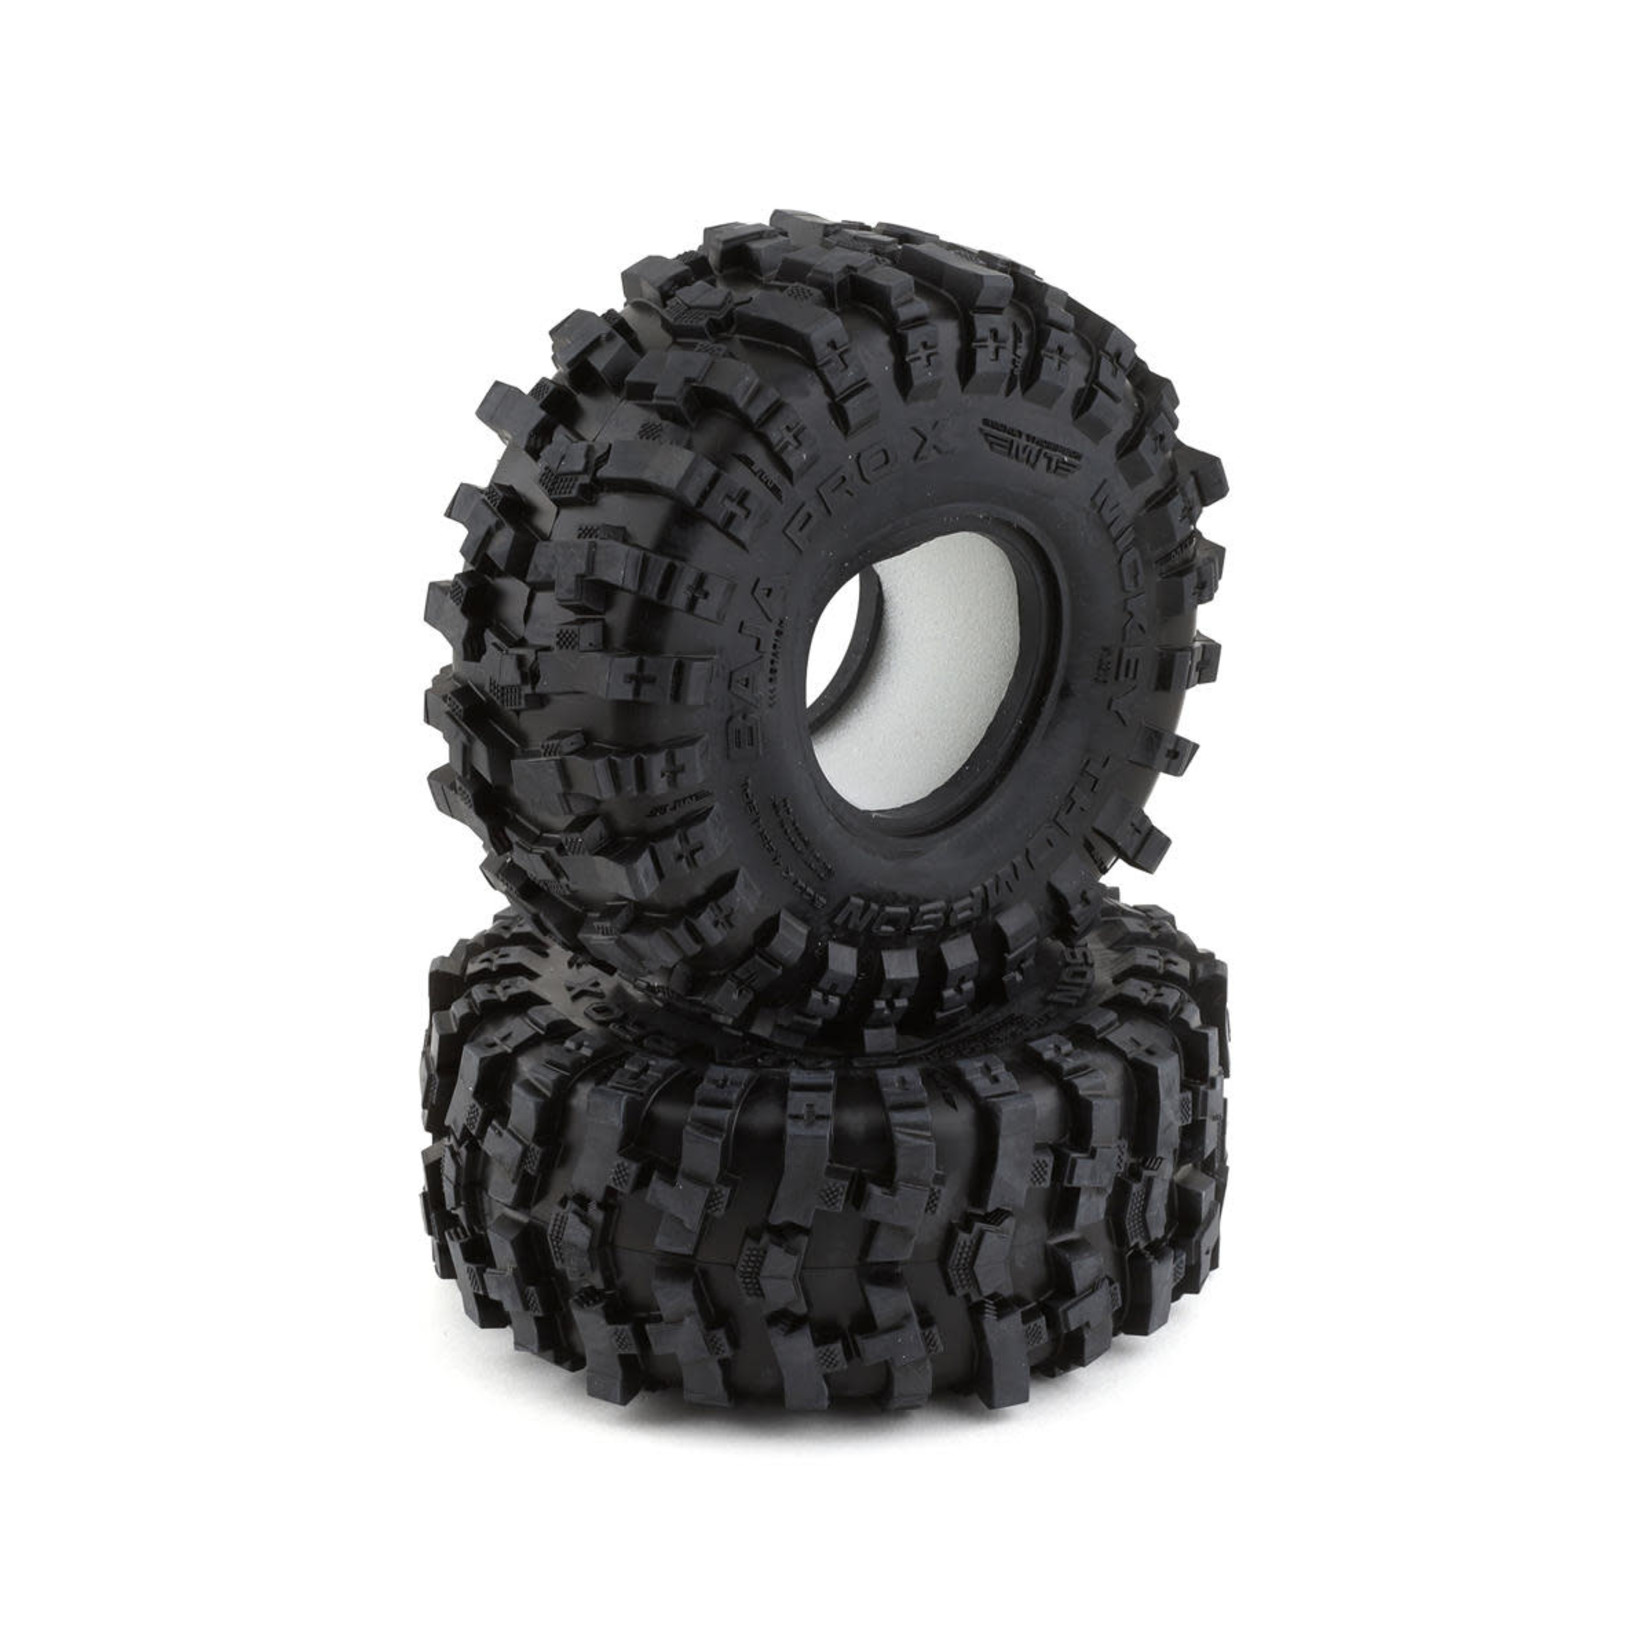 Pro-Line Pro-Line Mickey Thompson Baja Pro X 1.9" Rock Crawler Tires (2) (G8) w/Memory Foam #10213-14